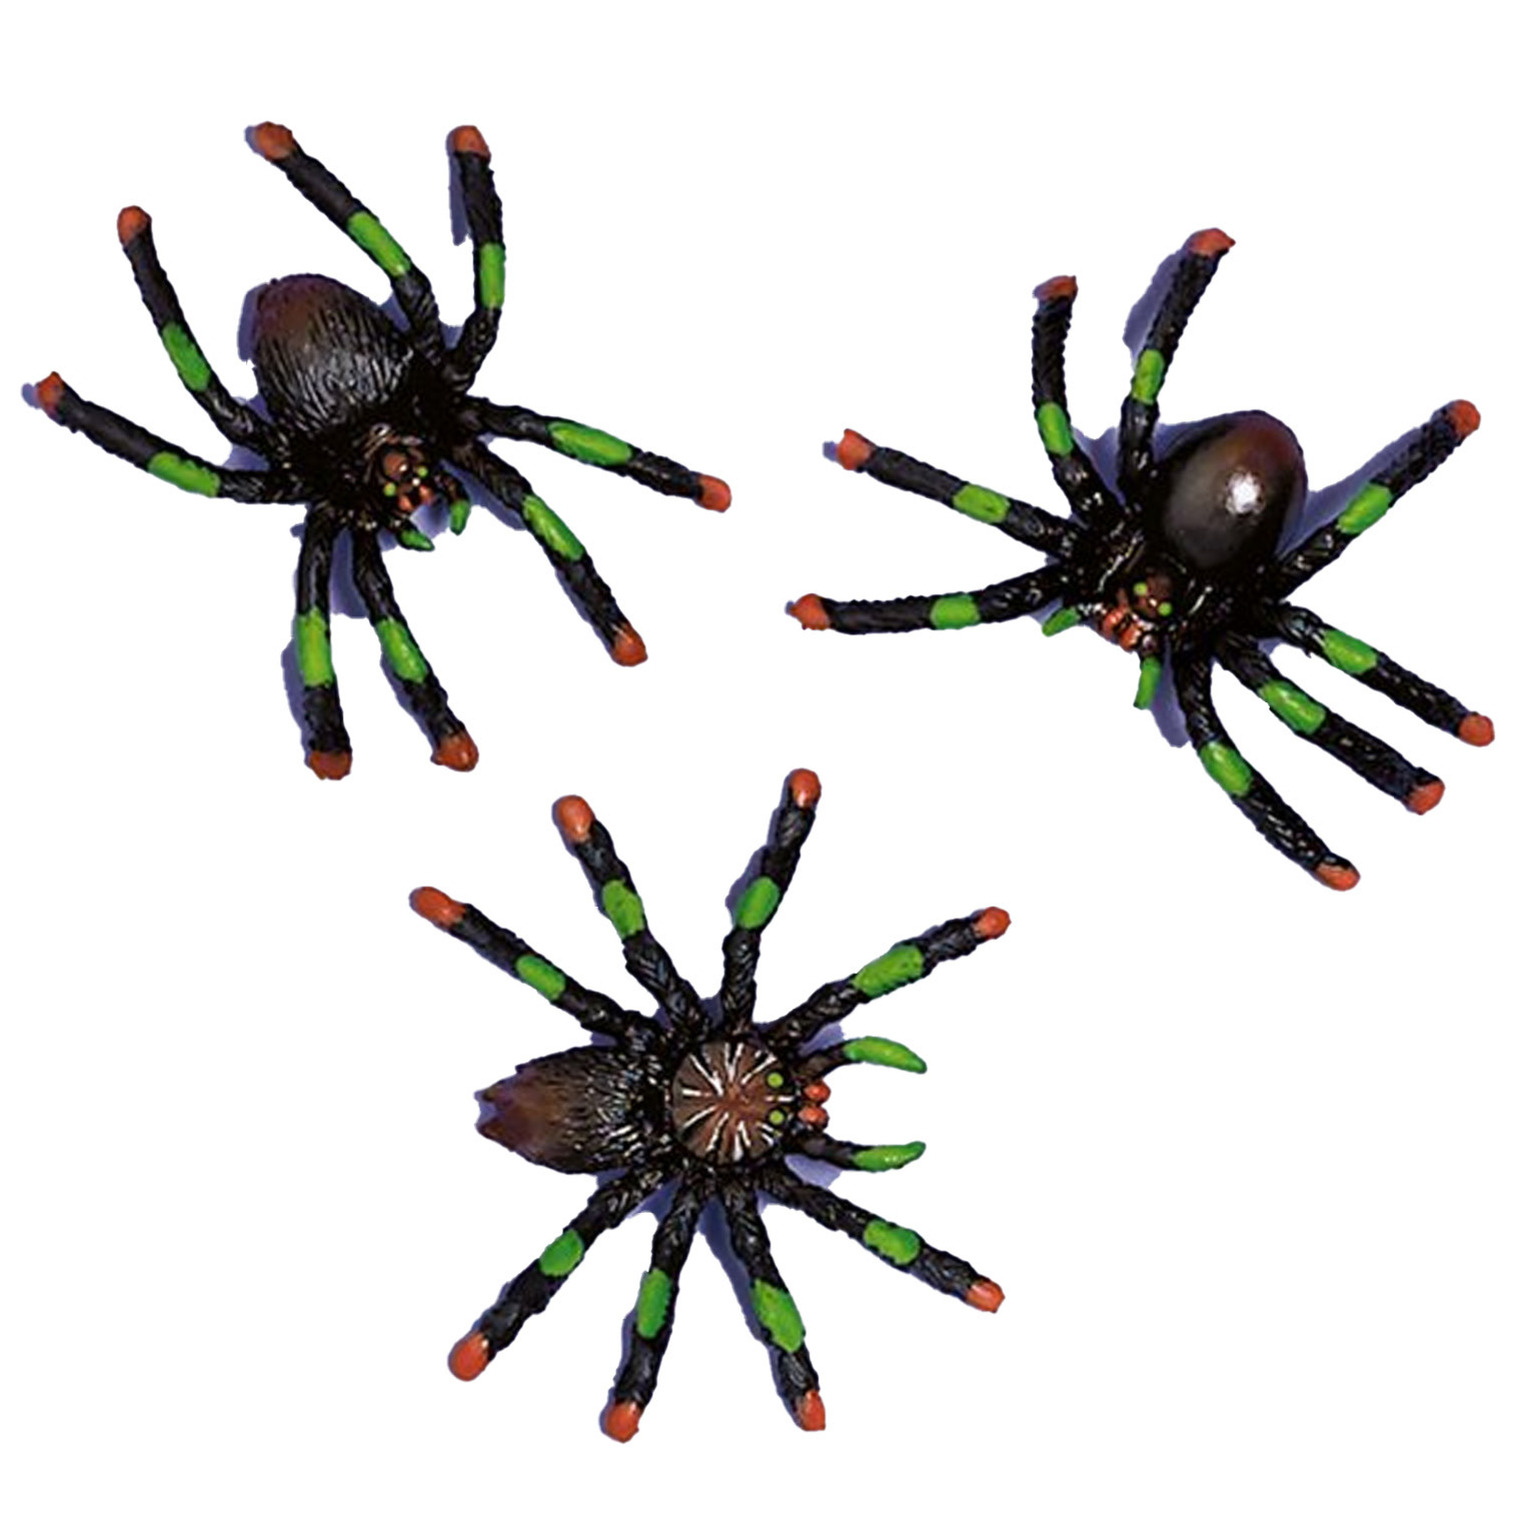 Nep spinnen/spinnetjes 5 x 4 cm - zwart - 24x stuks - Horror/griezel thema decoratie beestjes